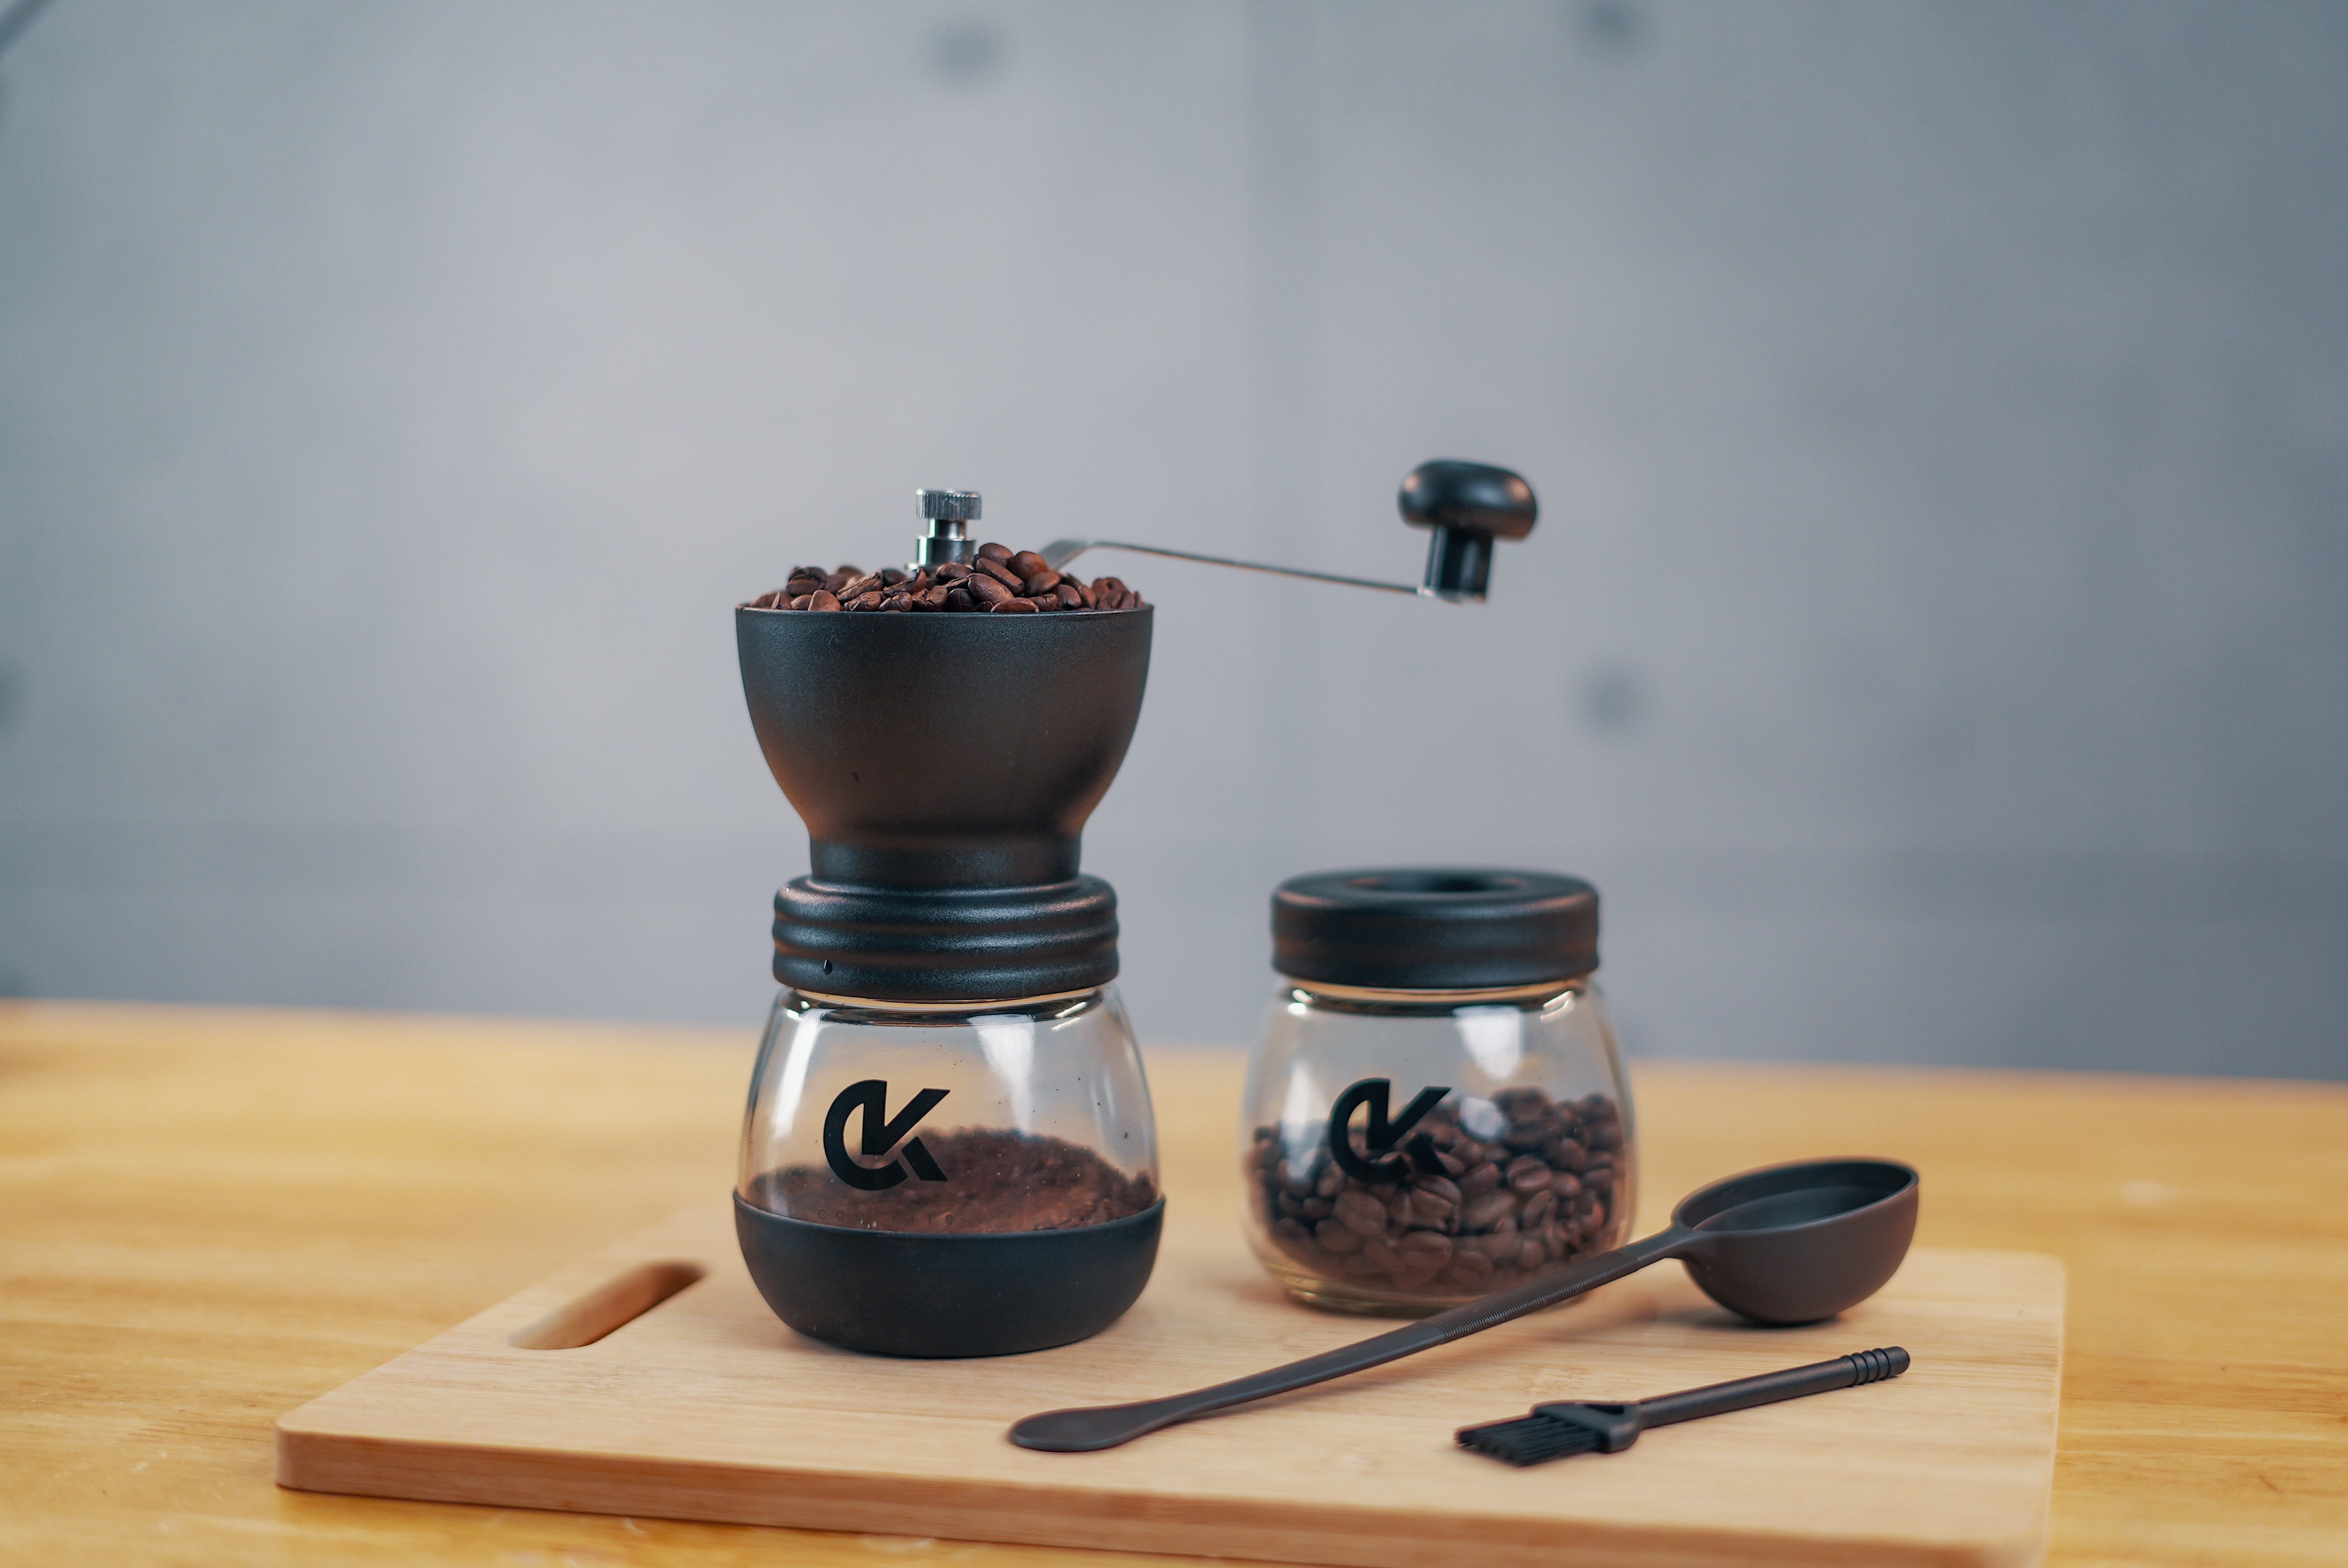 Manual Coffee Bean Grinder - 2 Glass Jars 11oz each